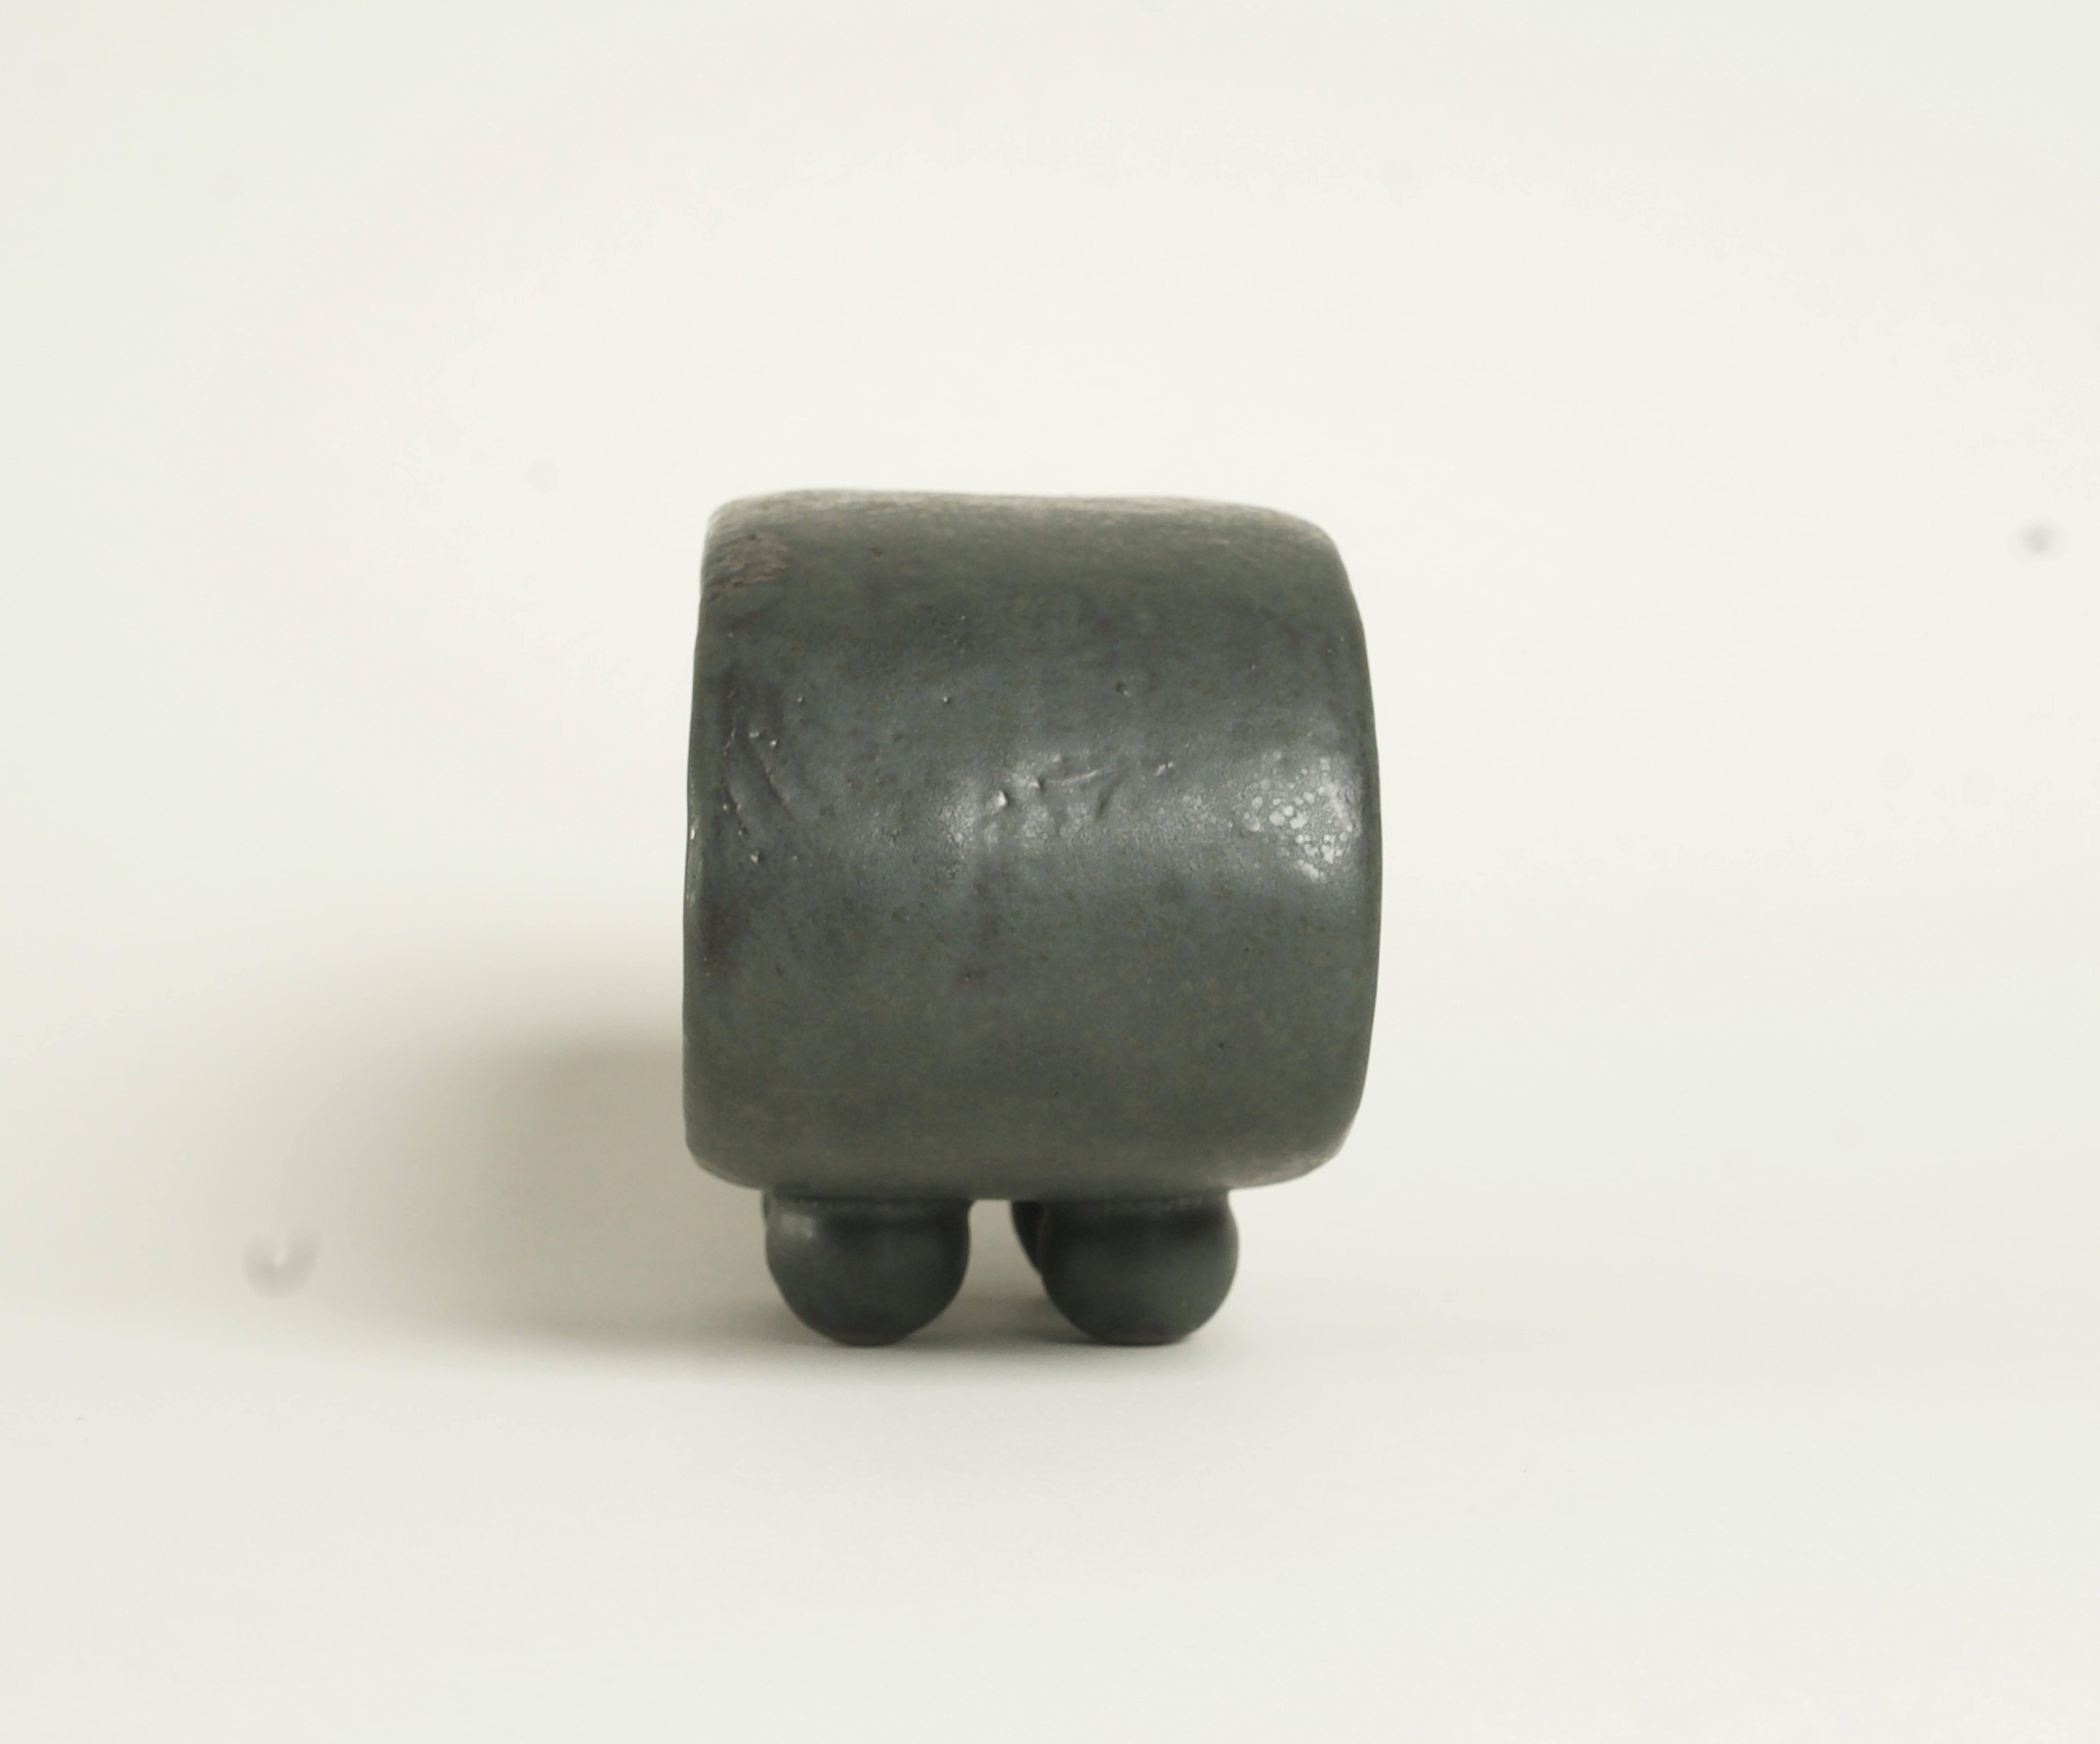 Organic Modern Black with Dark Green Undertones Hollow Ceramic Sculpture Ball Feet, Hand Built For Sale